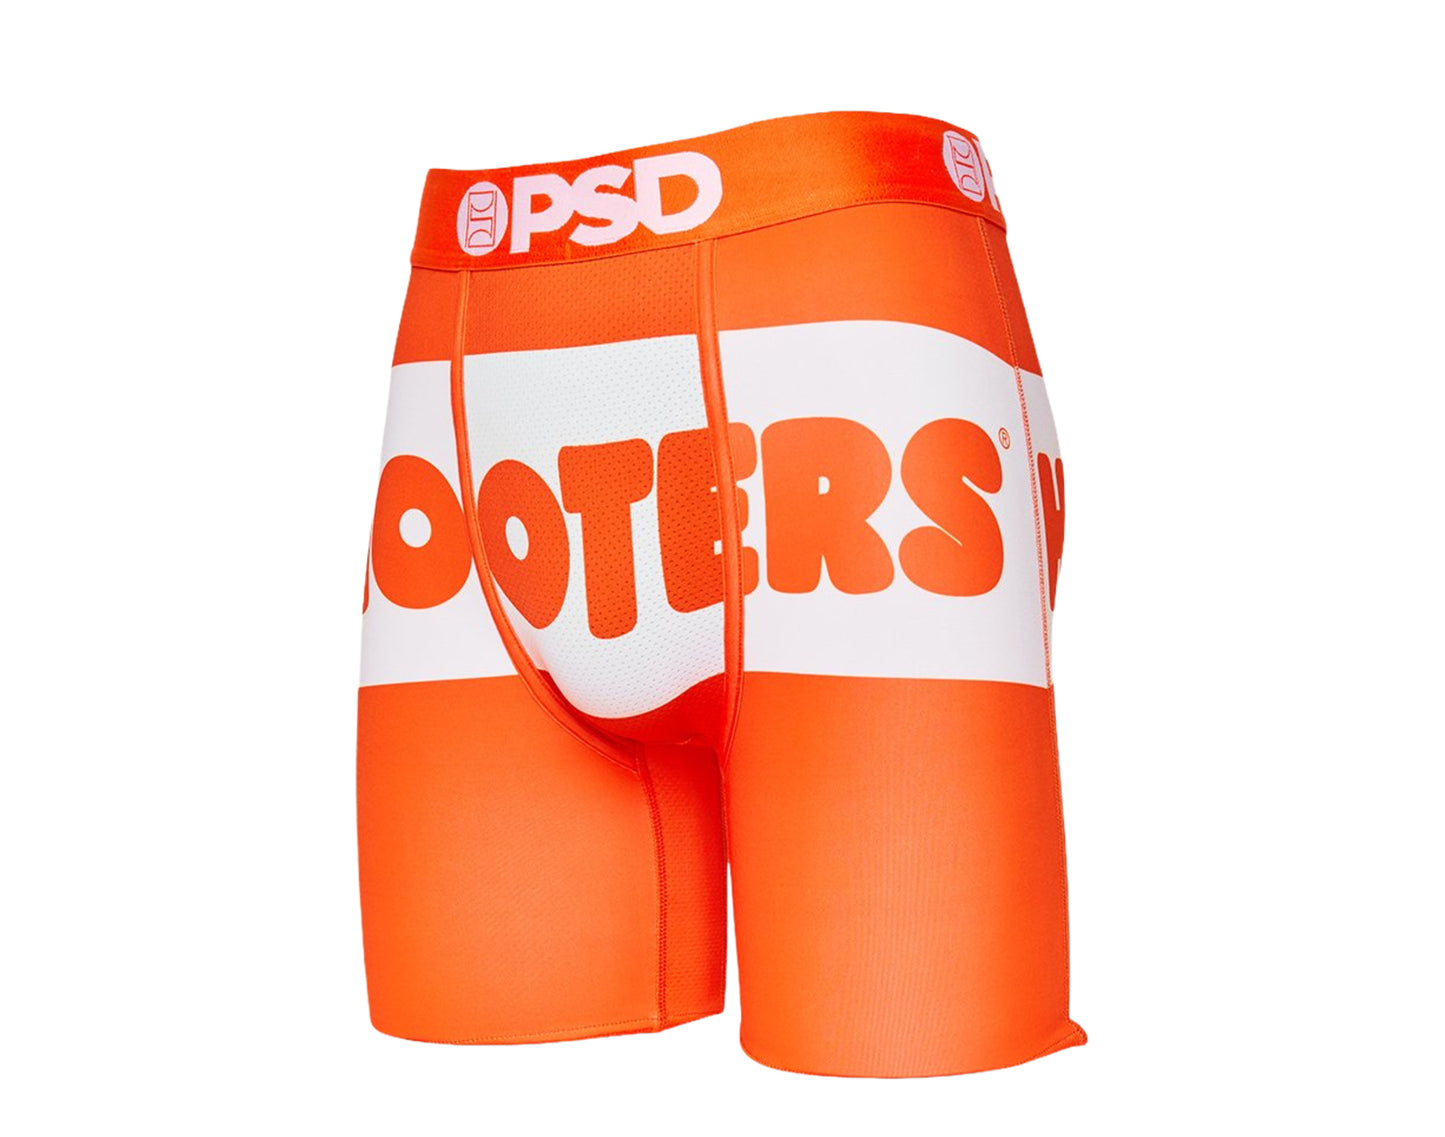 PSD Hooters - Corp Logo Boxer Briefs Men's Underwear